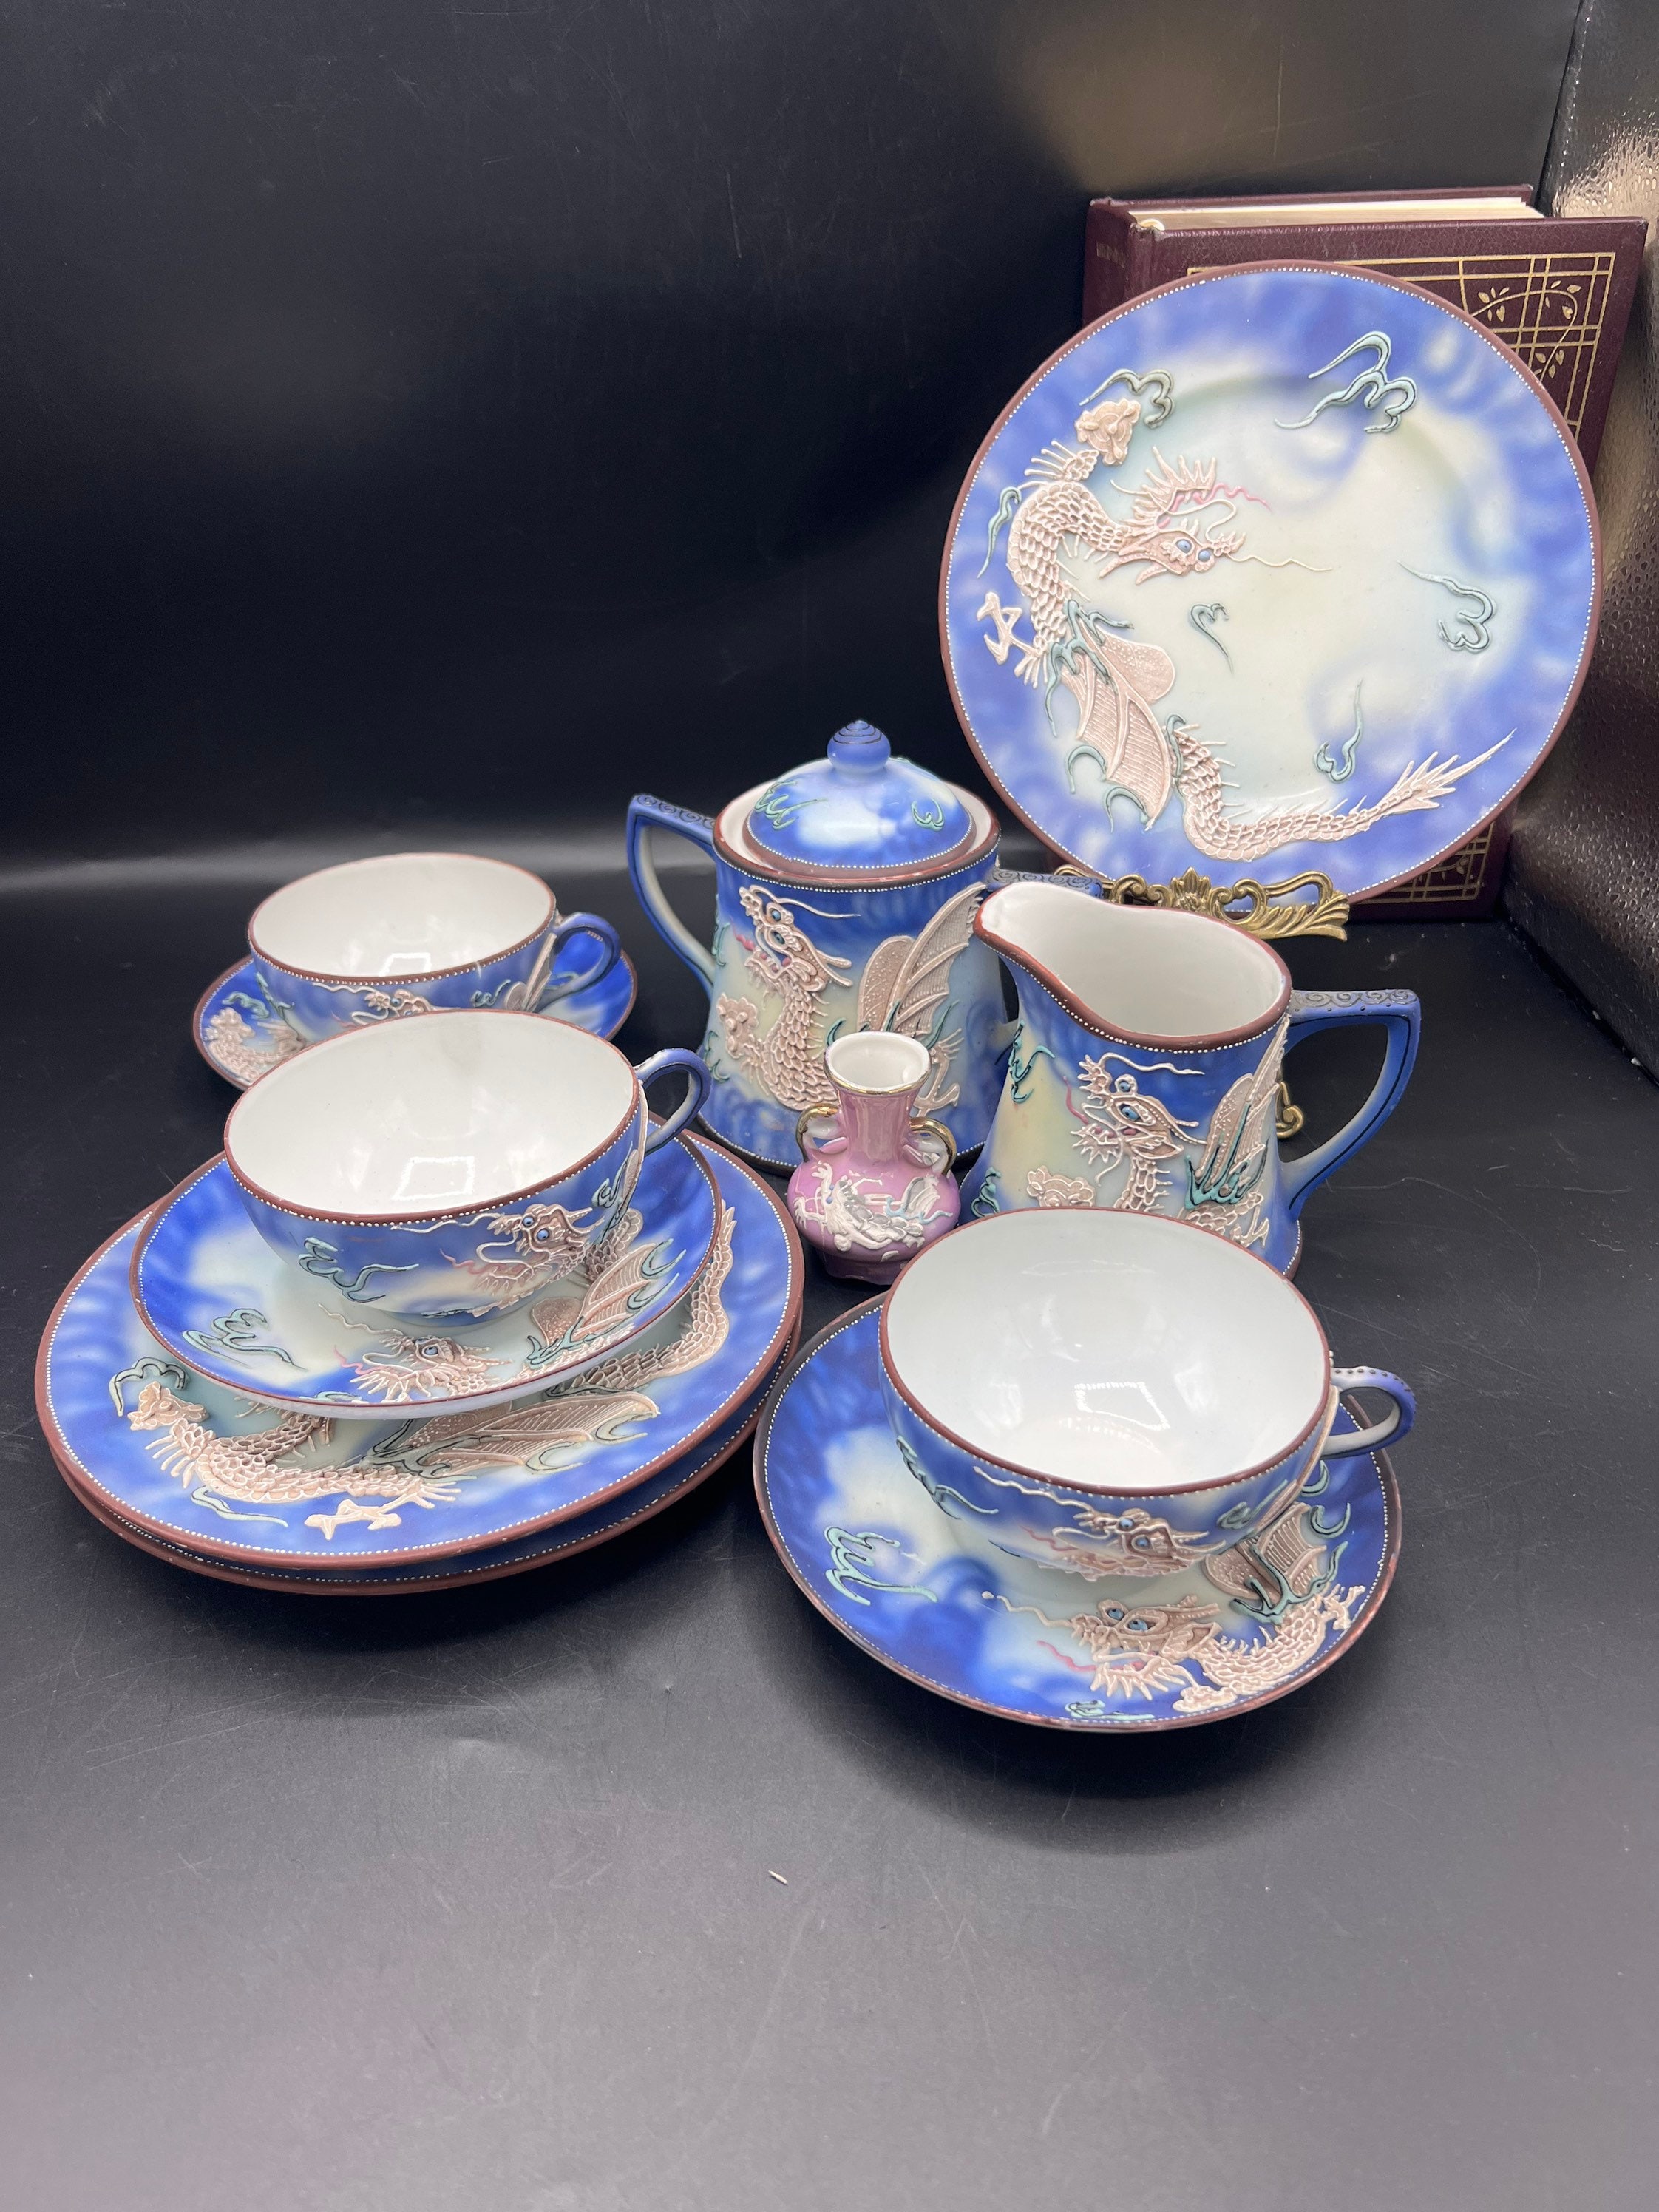 Dragon tea set has interesting form, history